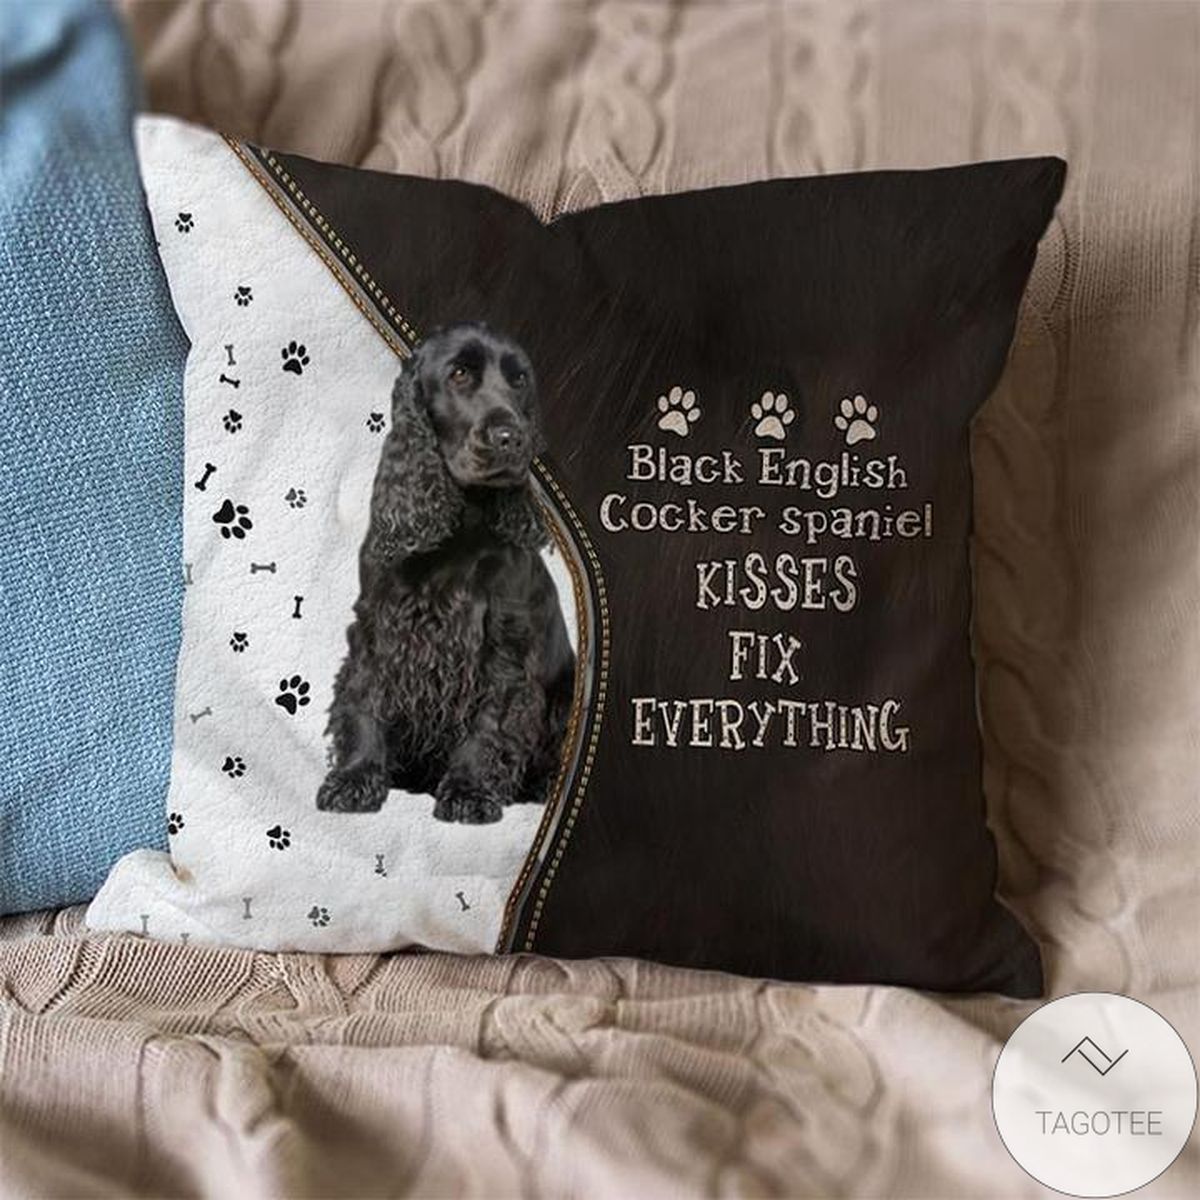 Black English Cocker Spaniel Kisses Fix Everything Pillowcase